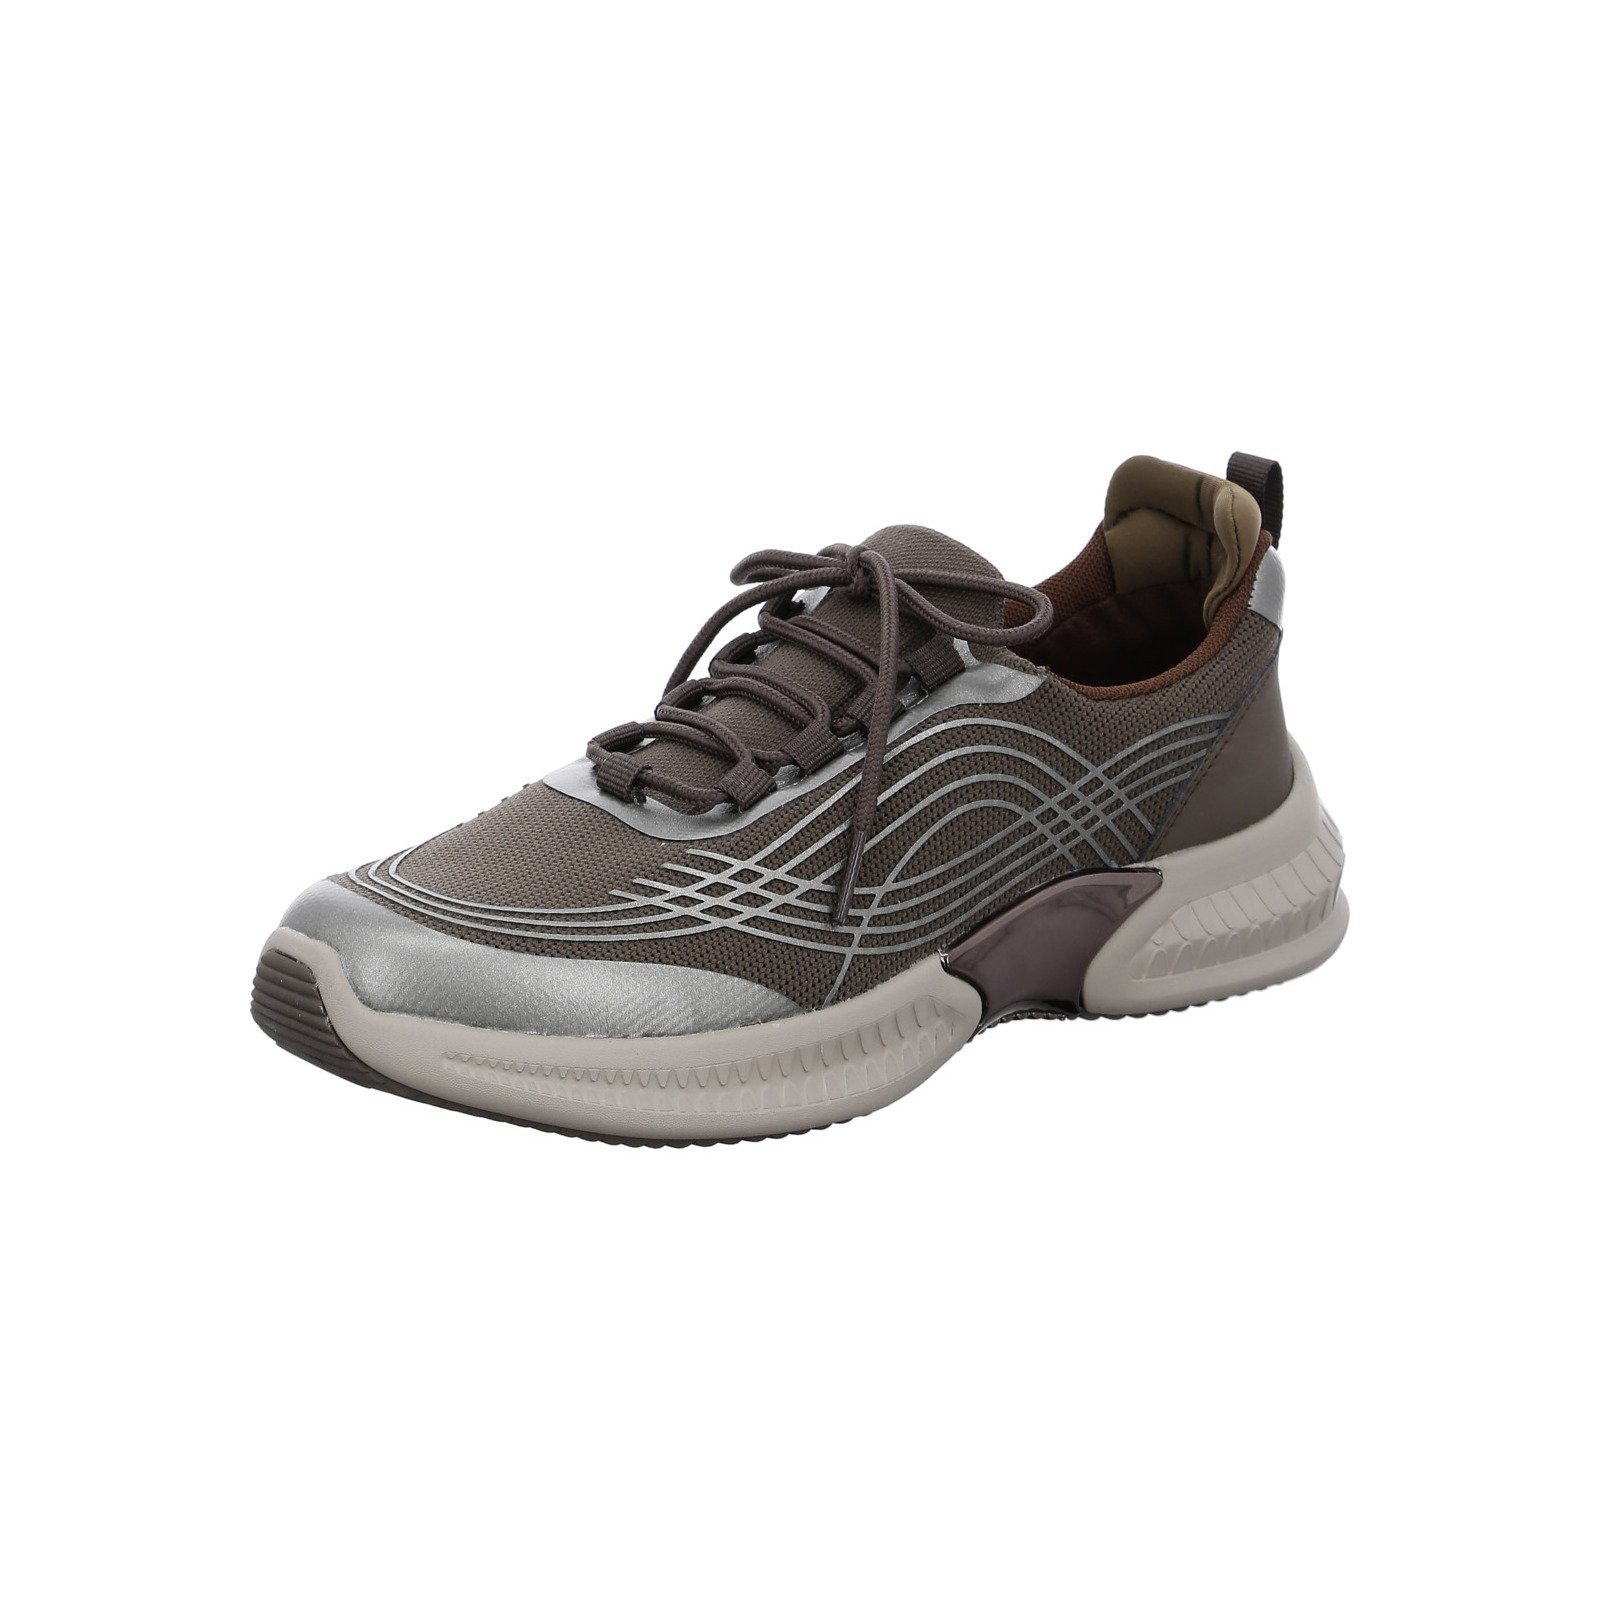 Ara Athen - Damen Schuhe Schnürschuh Sneaker Materialmix grau